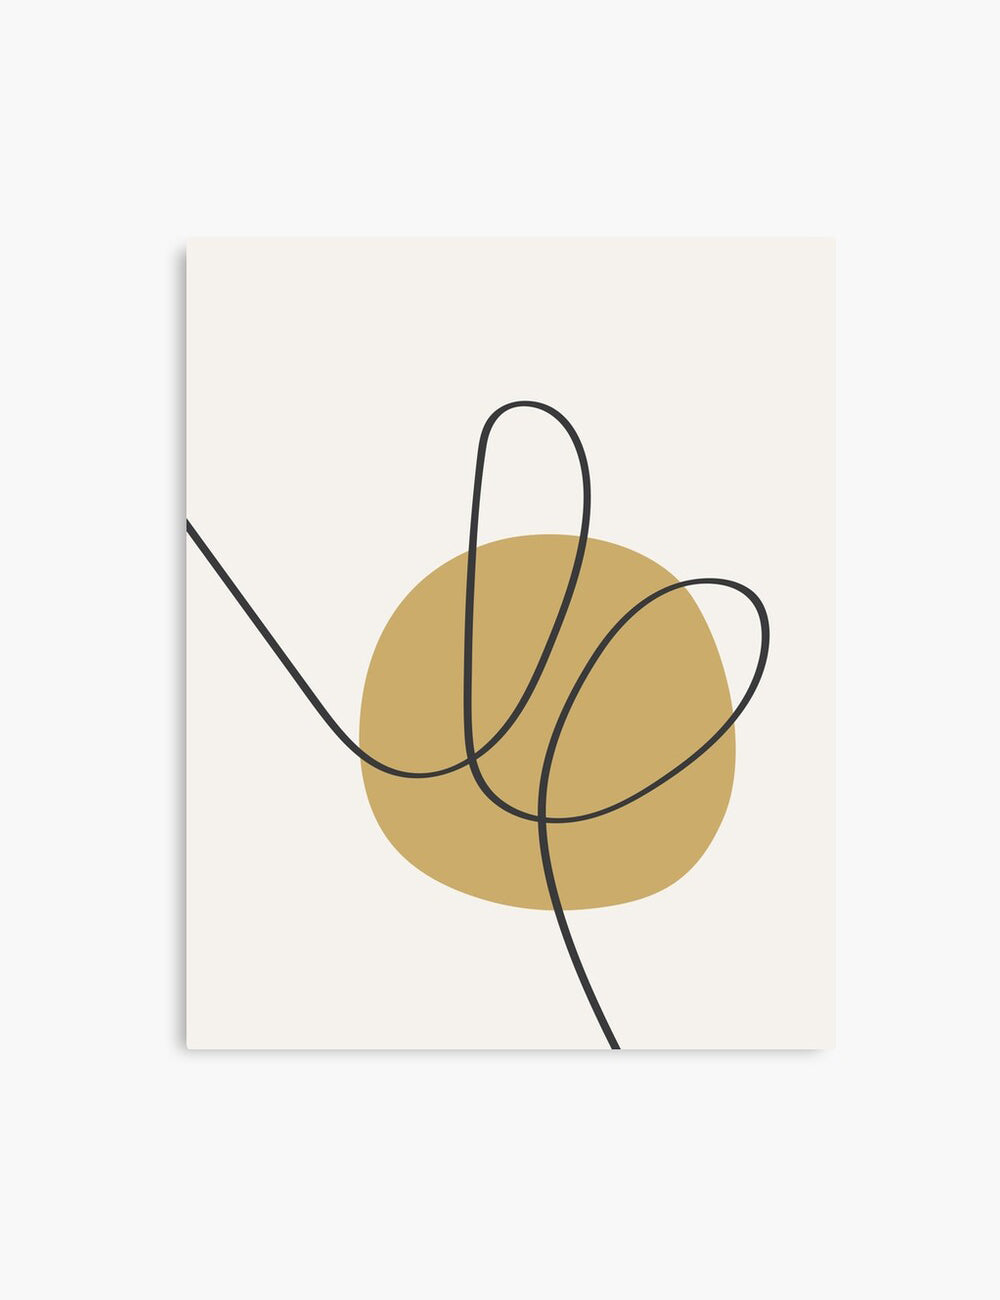 MINIMAL LINE ART. Abstract Heart Shape. Boho Aesthetic. Yellow Gold. Beige. Black. Printable Wall Art Illustration. - PAPER MOON Art & Design